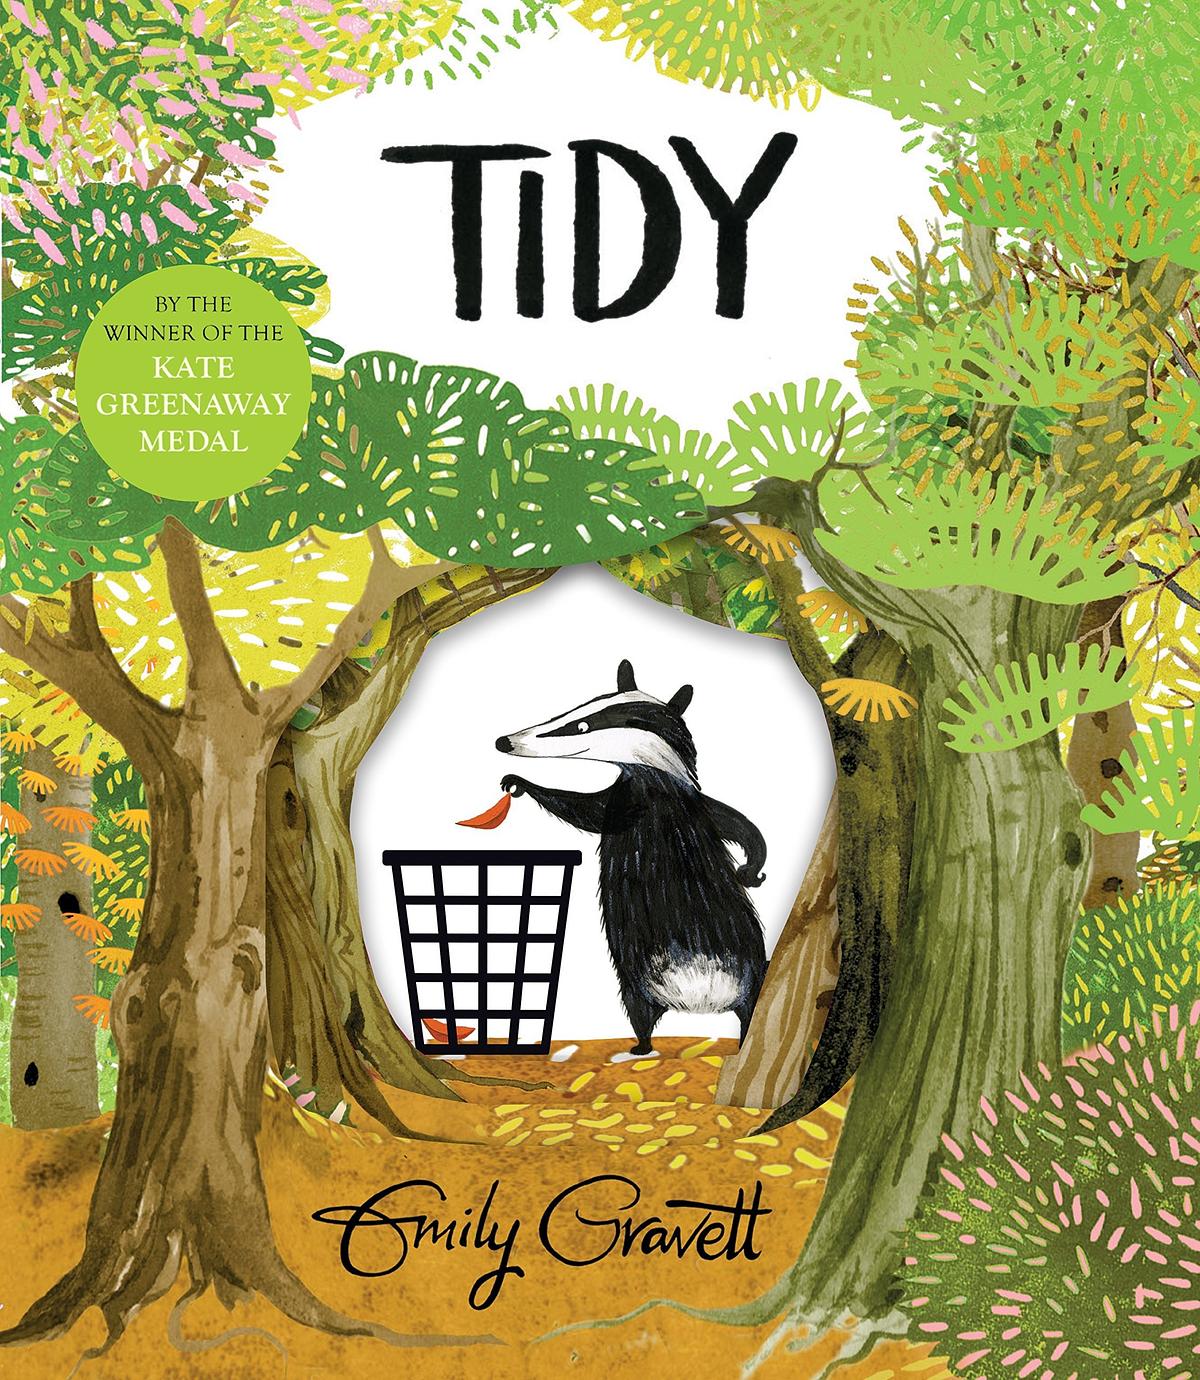 Tidy by Emily Gravett book cover